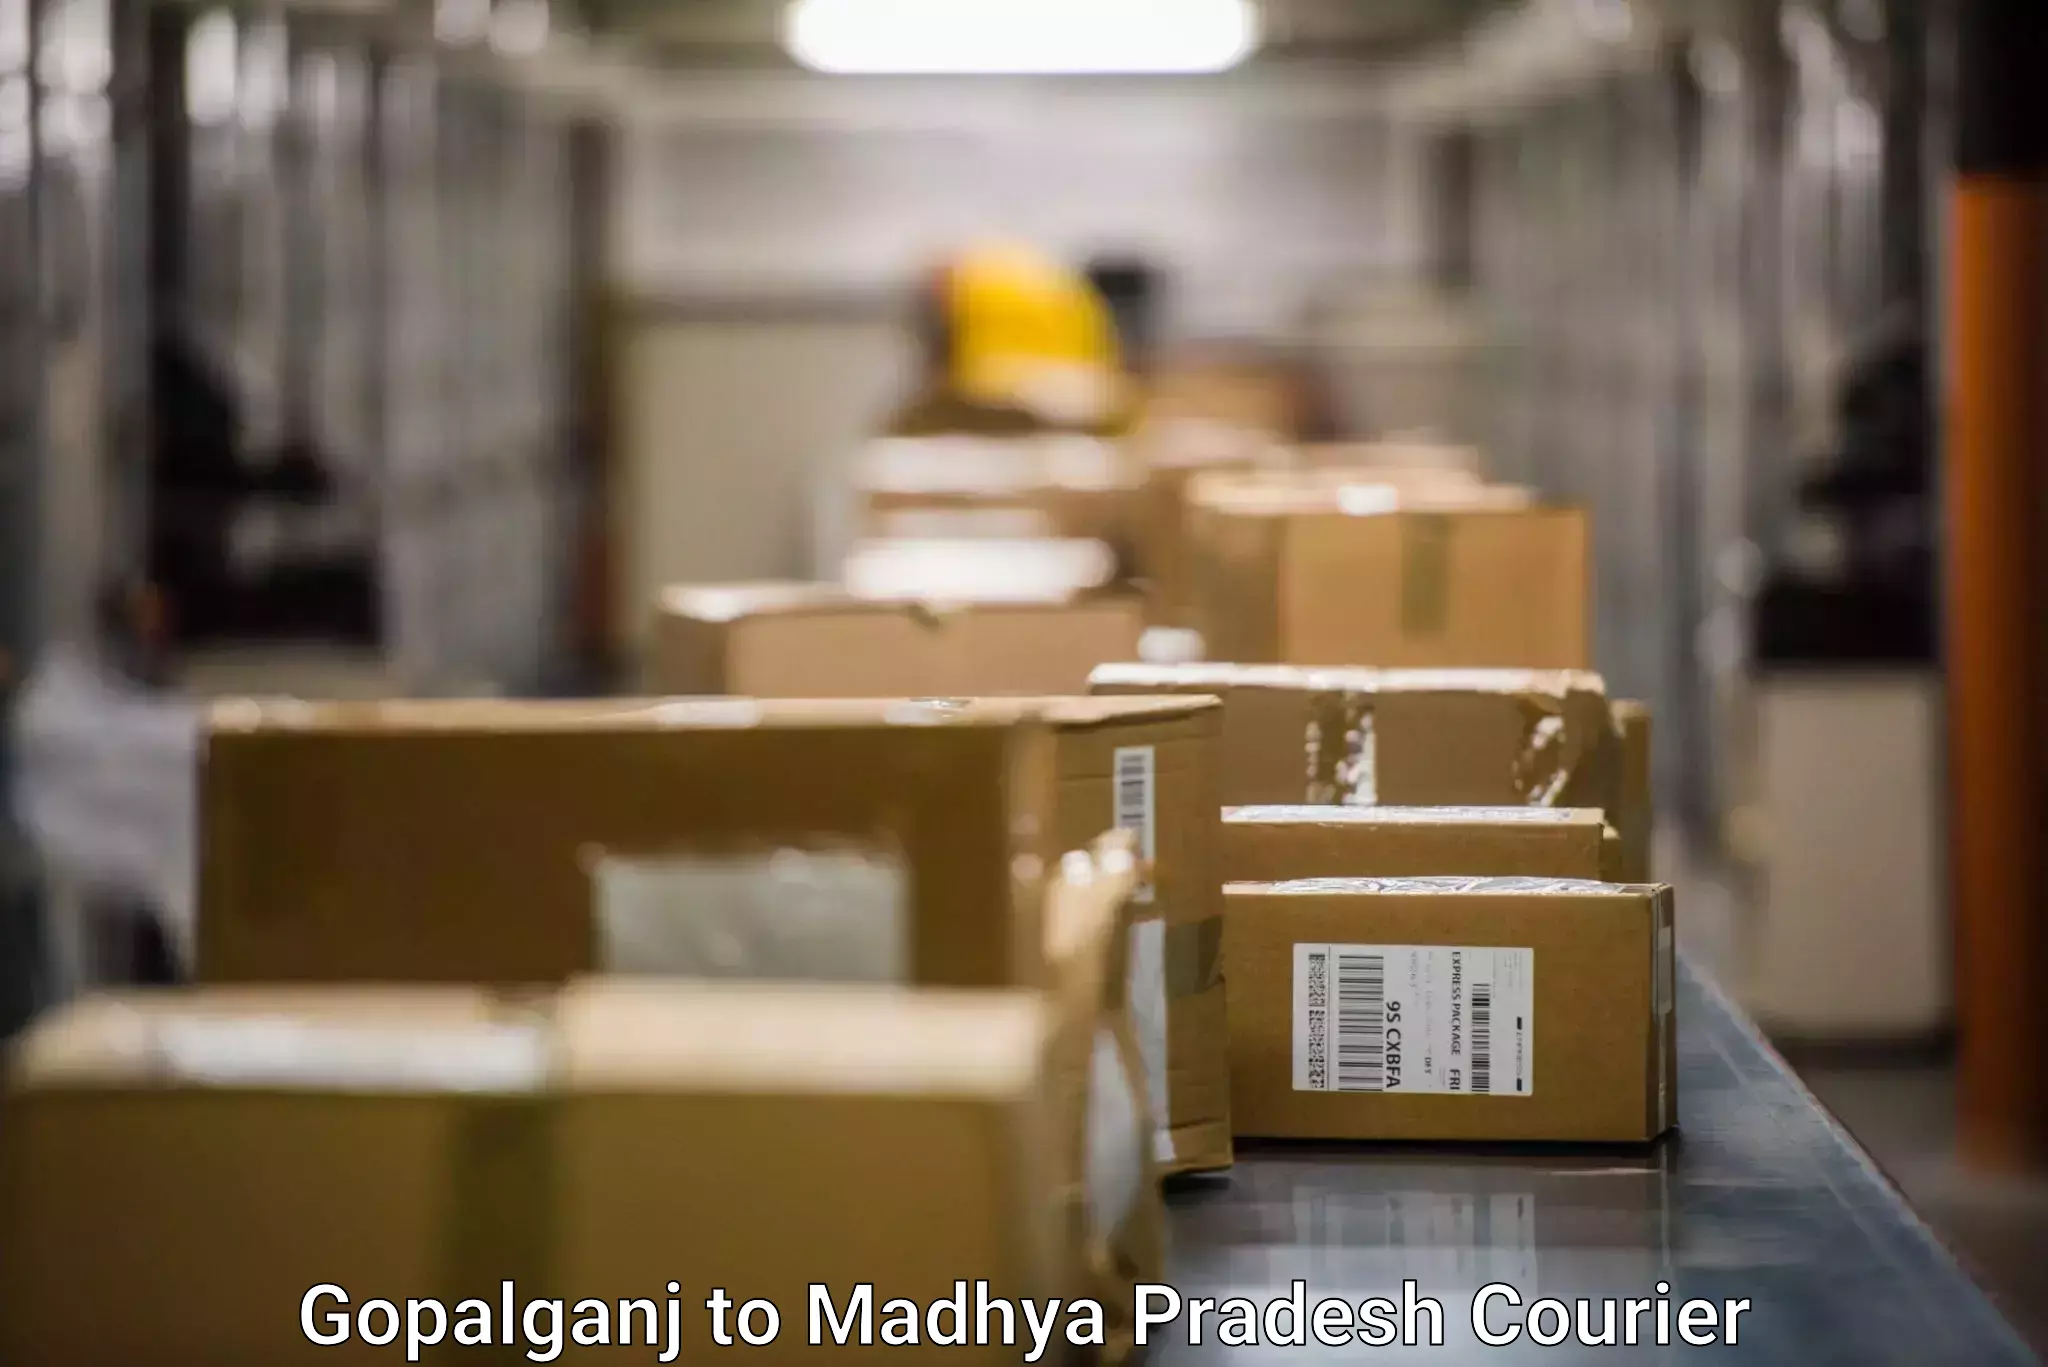 Customer-focused courier Gopalganj to Nagda